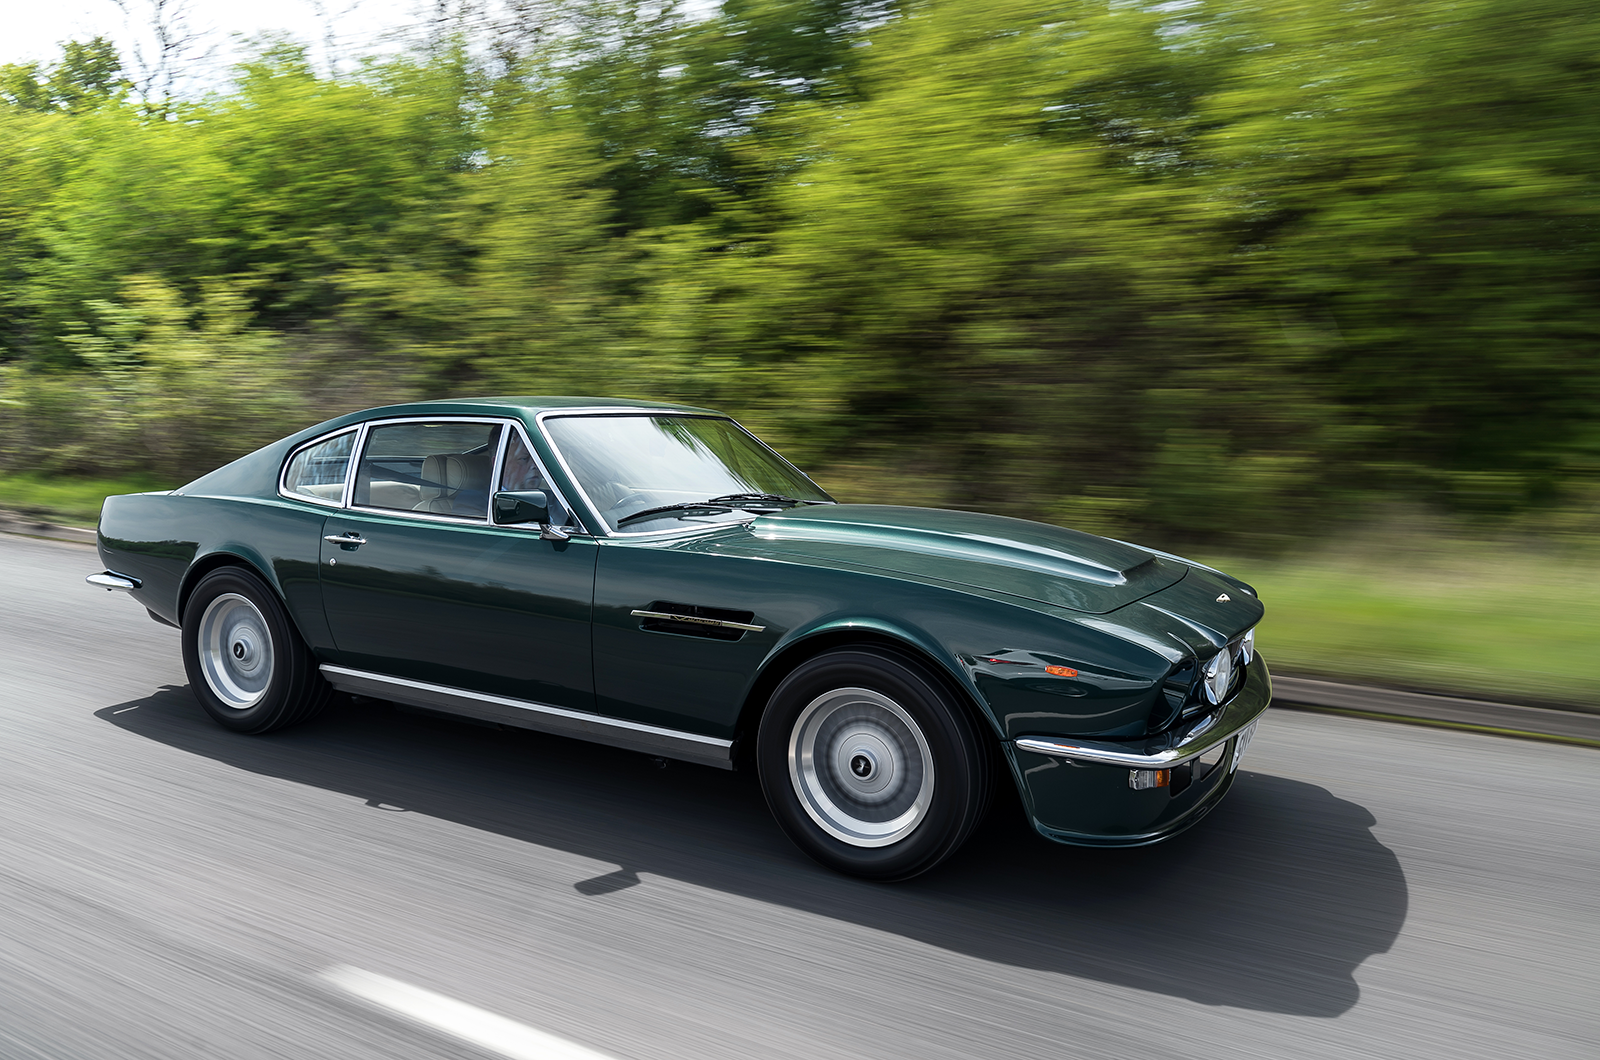 Classic & Sports Car – Advantage Aston Martin: driving the V8 Vantage